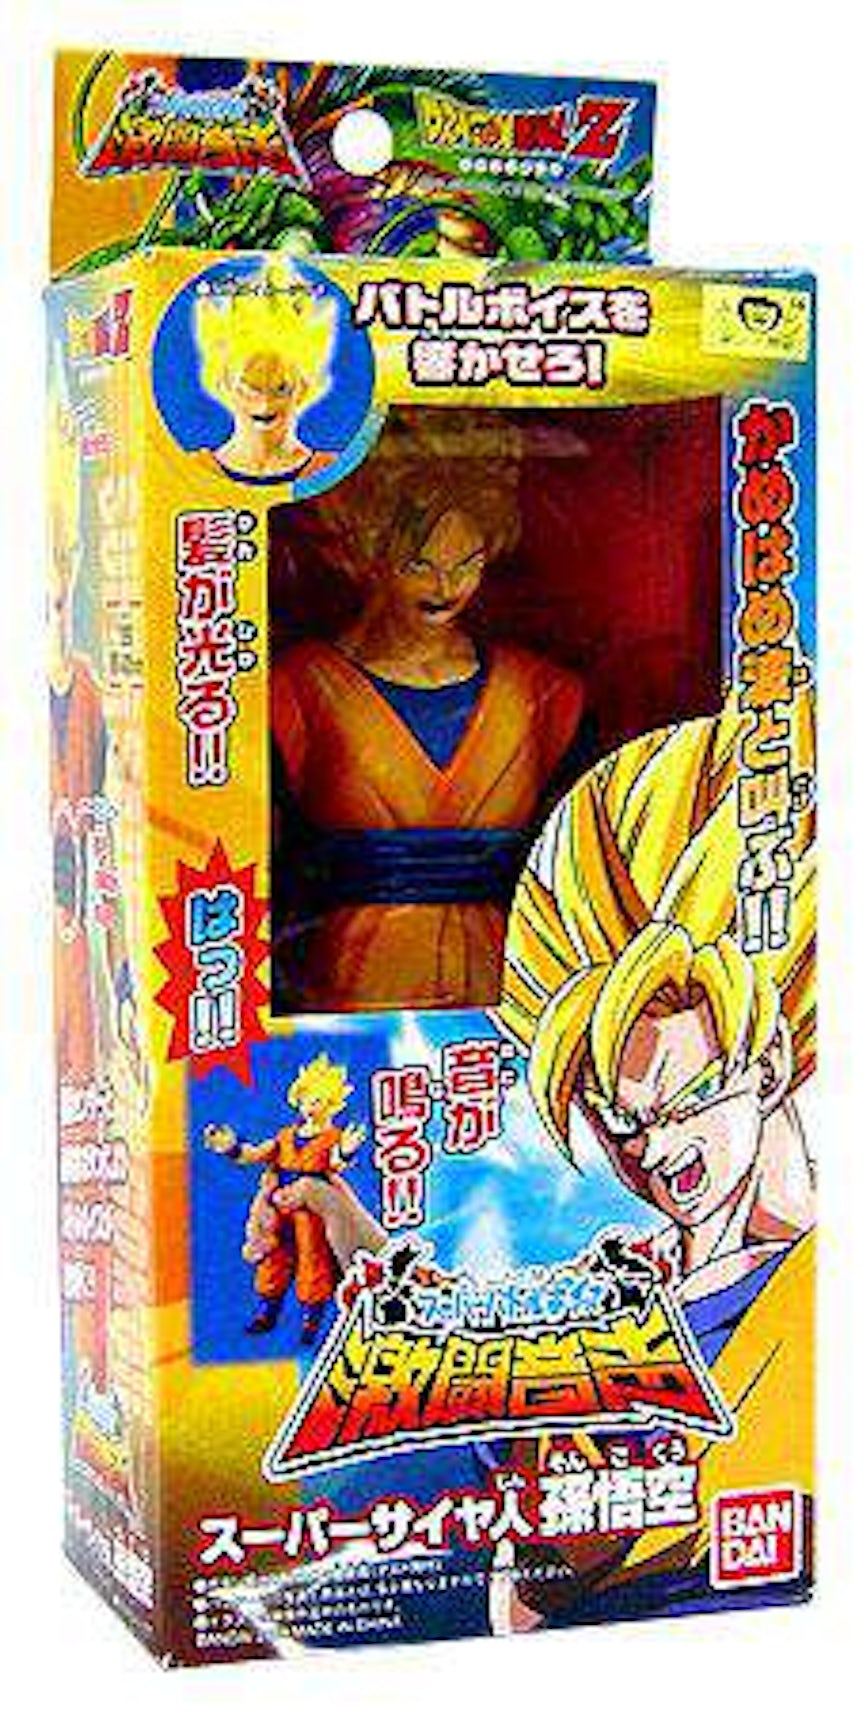 Bandai Japan Dragon Ball Z Light & Sound Super Saiyan Goku Action